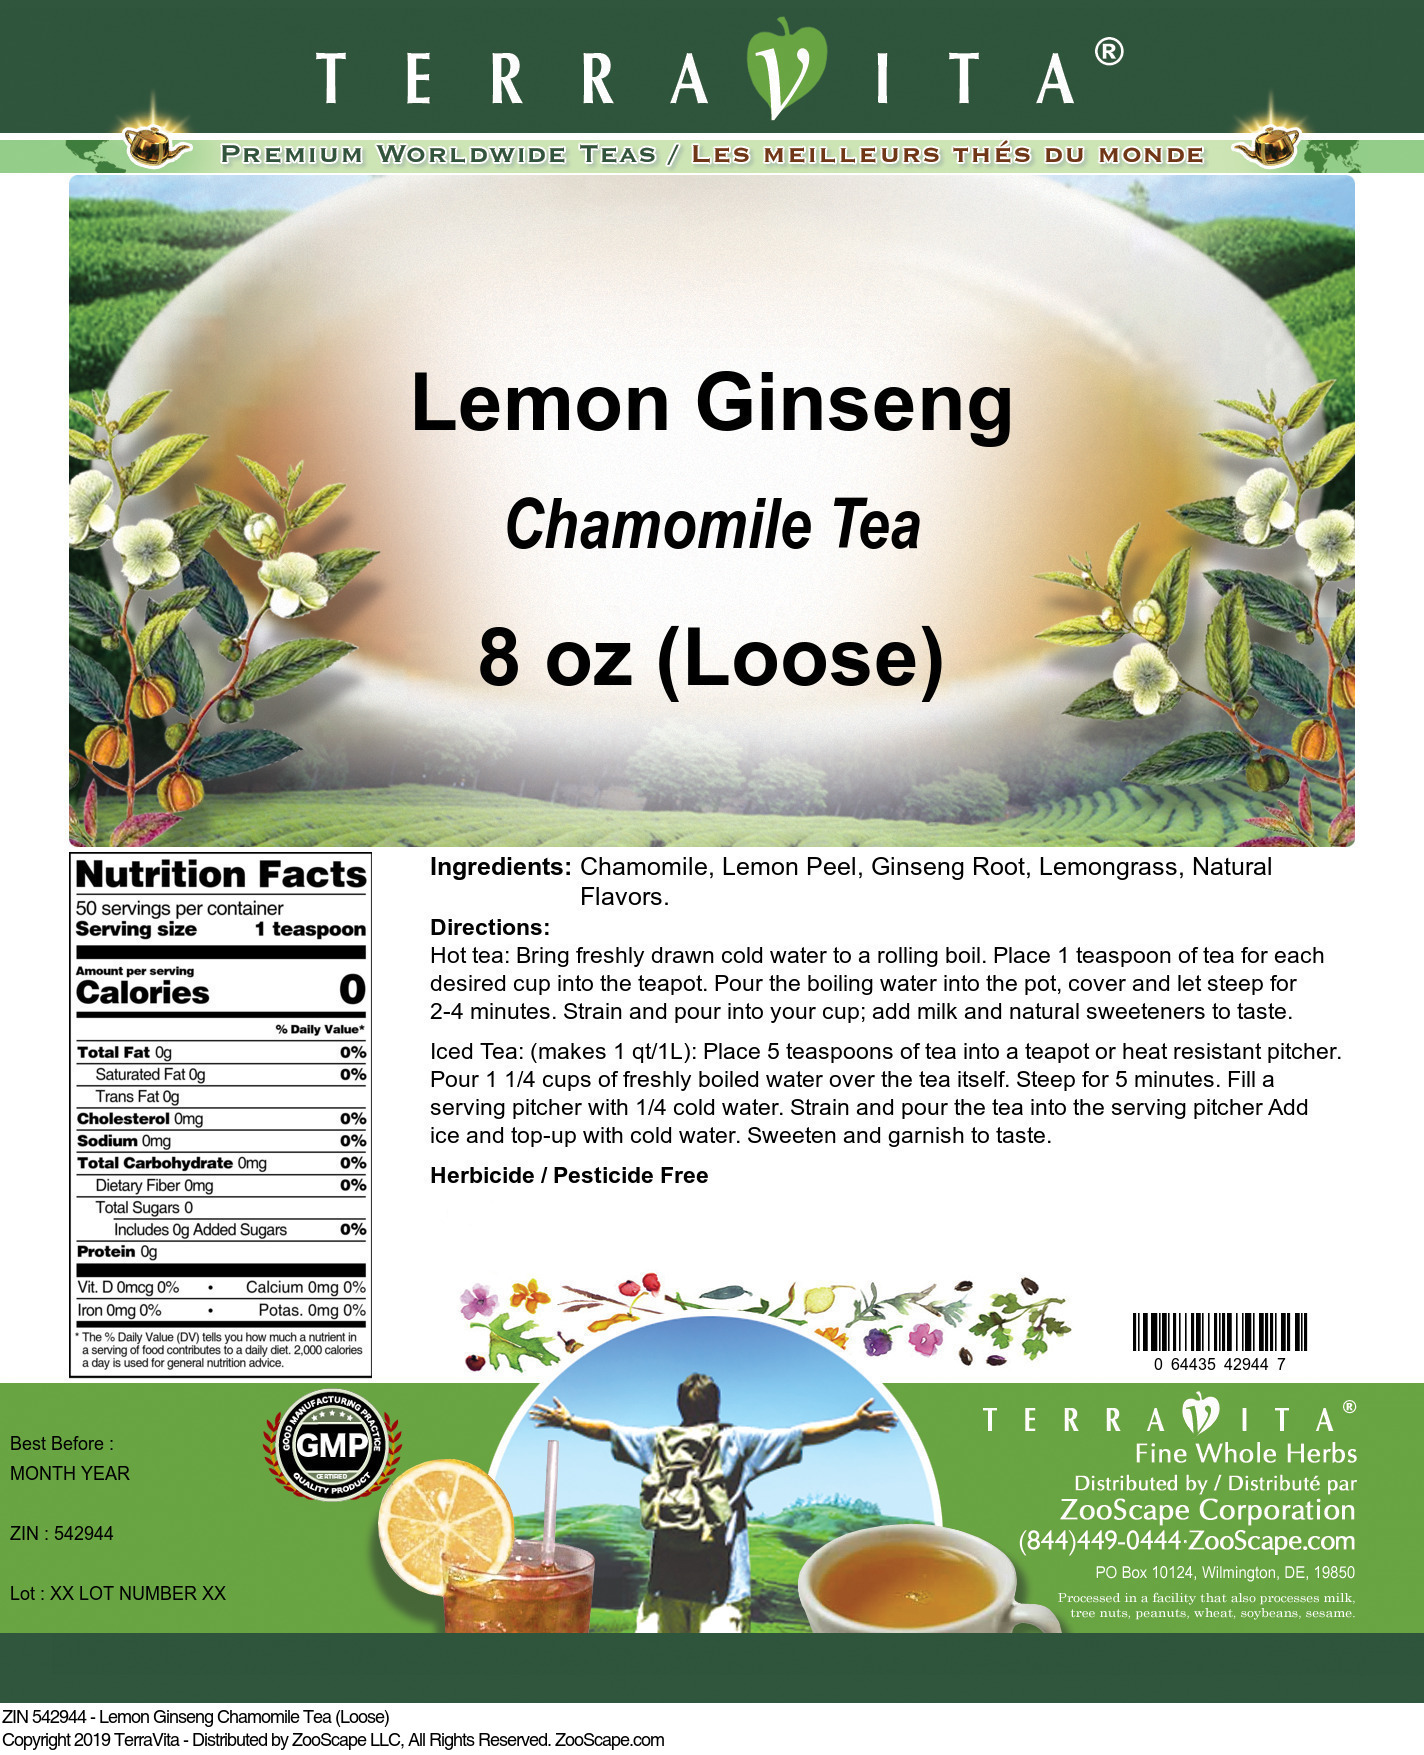 Lemon Ginseng Chamomile Tea (Loose) - Label